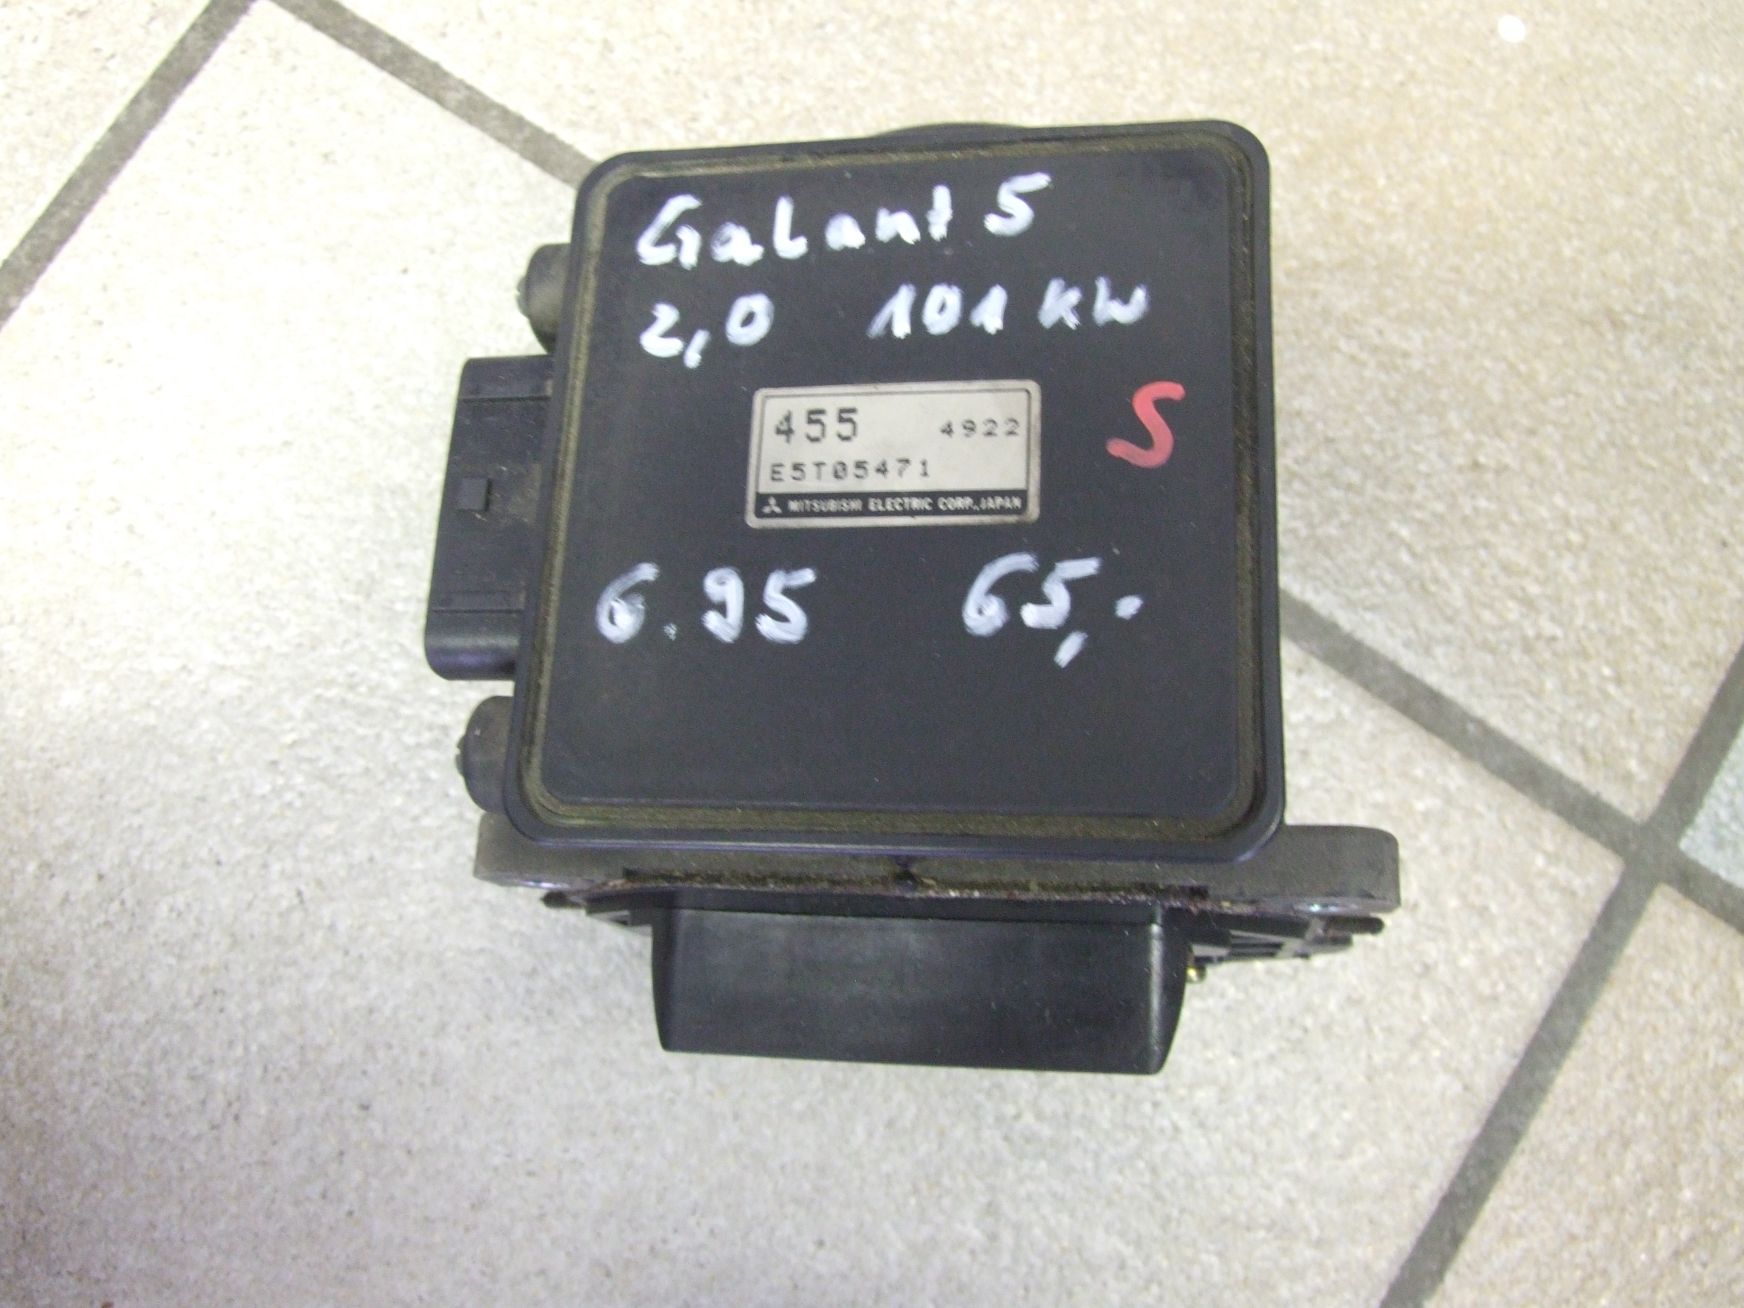 Luftmassenmesser aus Mitsubishi Galant 5 / E5T05471 (gebraucht)